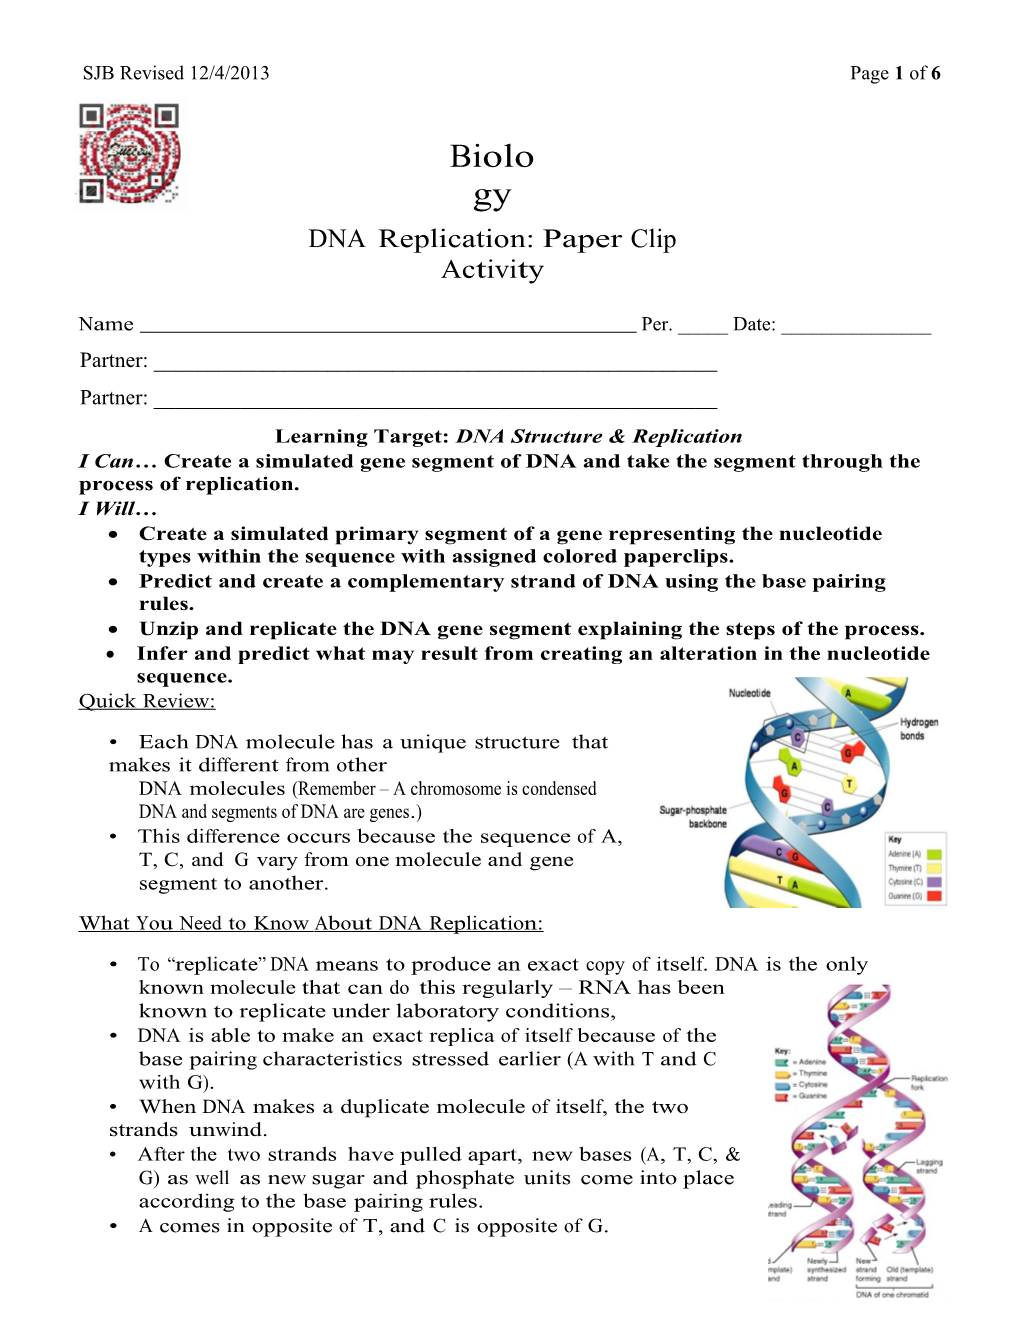 DNA Replication Paper Clip Activity